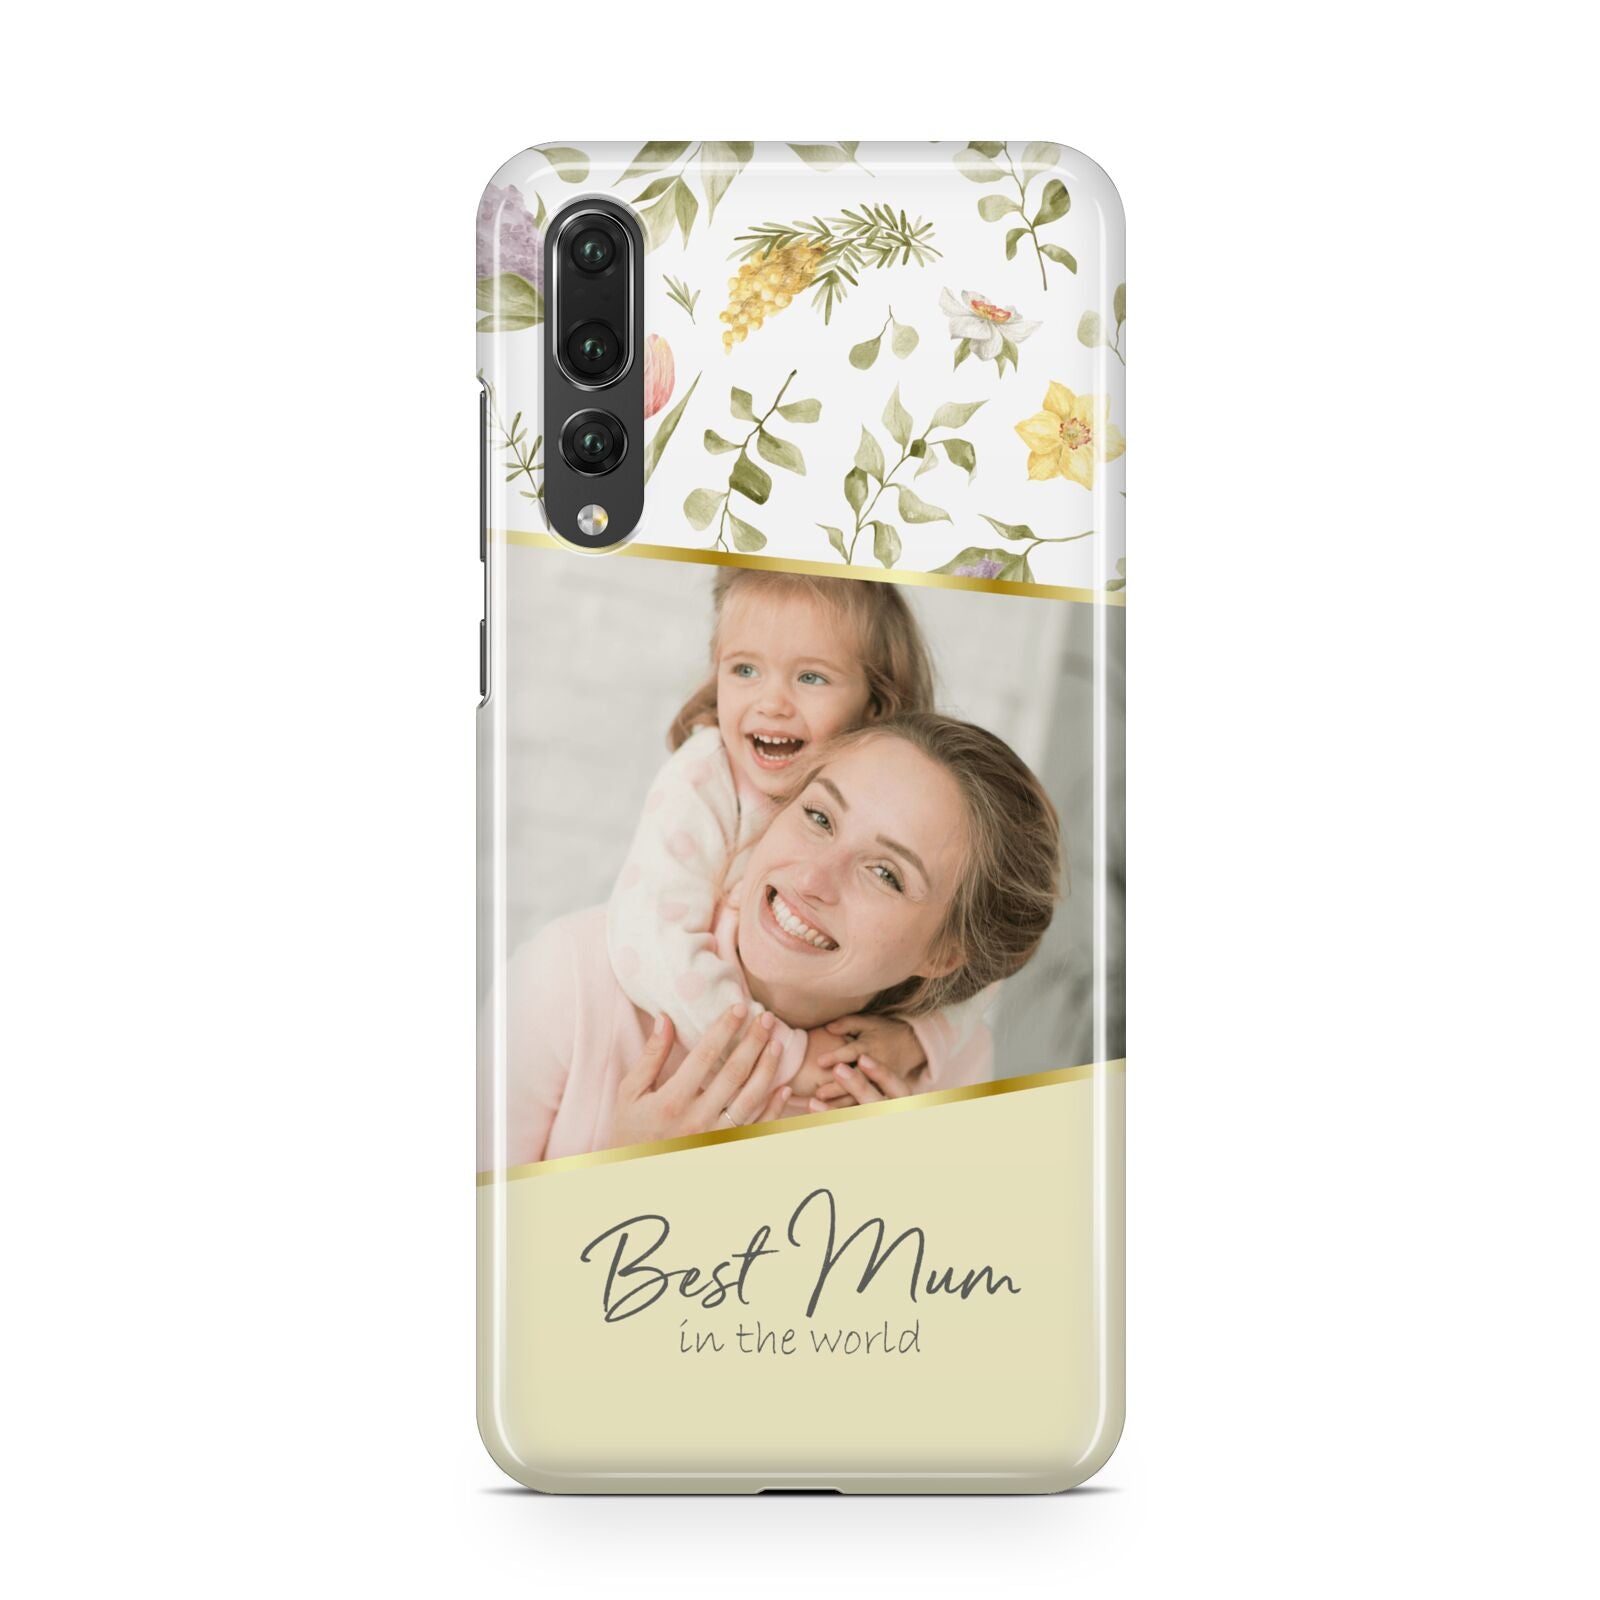 Personalised Best Mum Huawei P20 Pro Phone Case